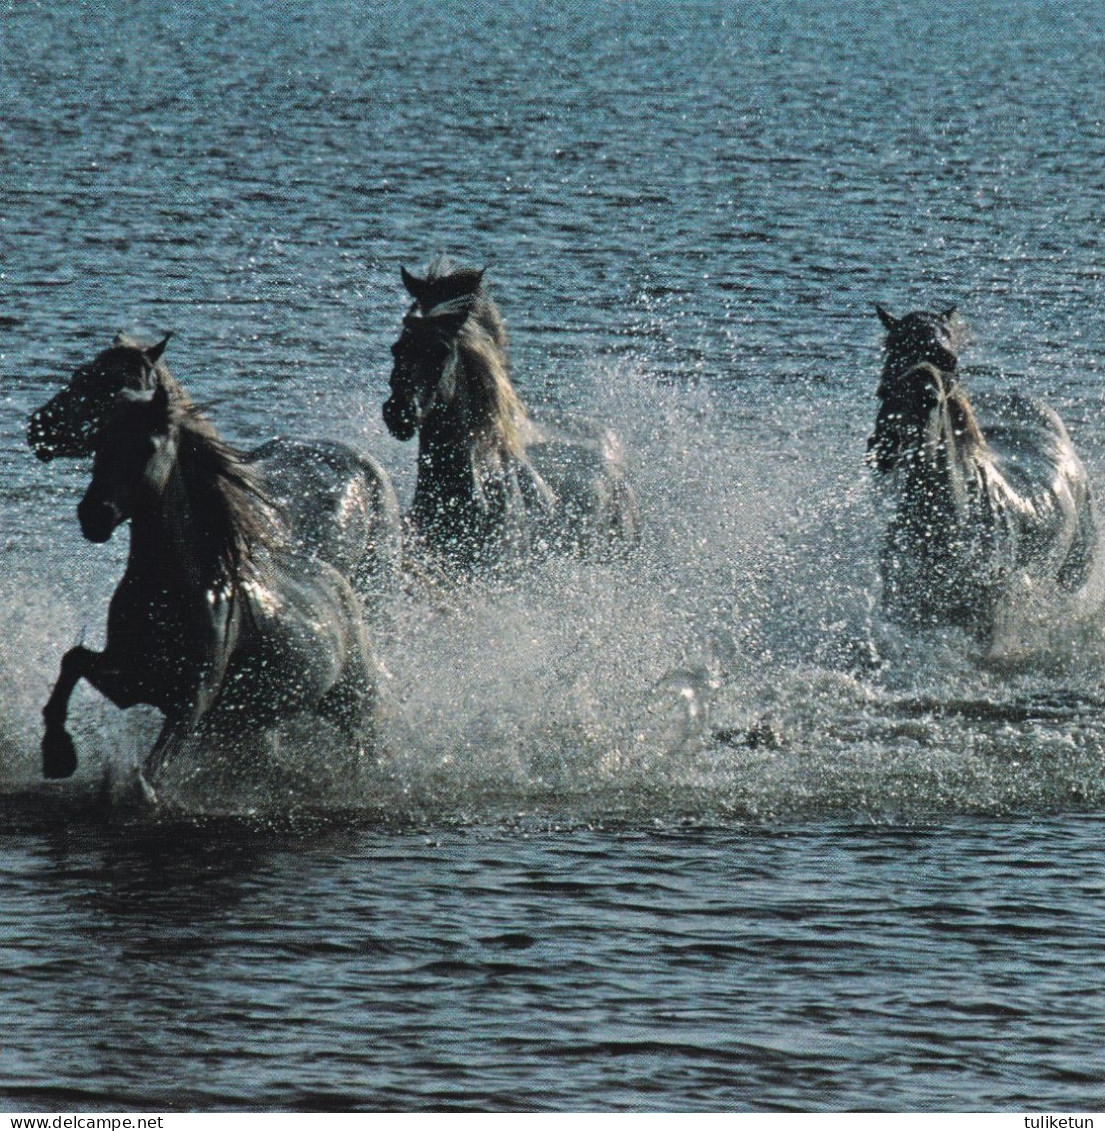 Horse - Cheval - Paard - Pferd - Cavallo - Cavalo - Caballo - Häst - Editions Hazan - Pferde